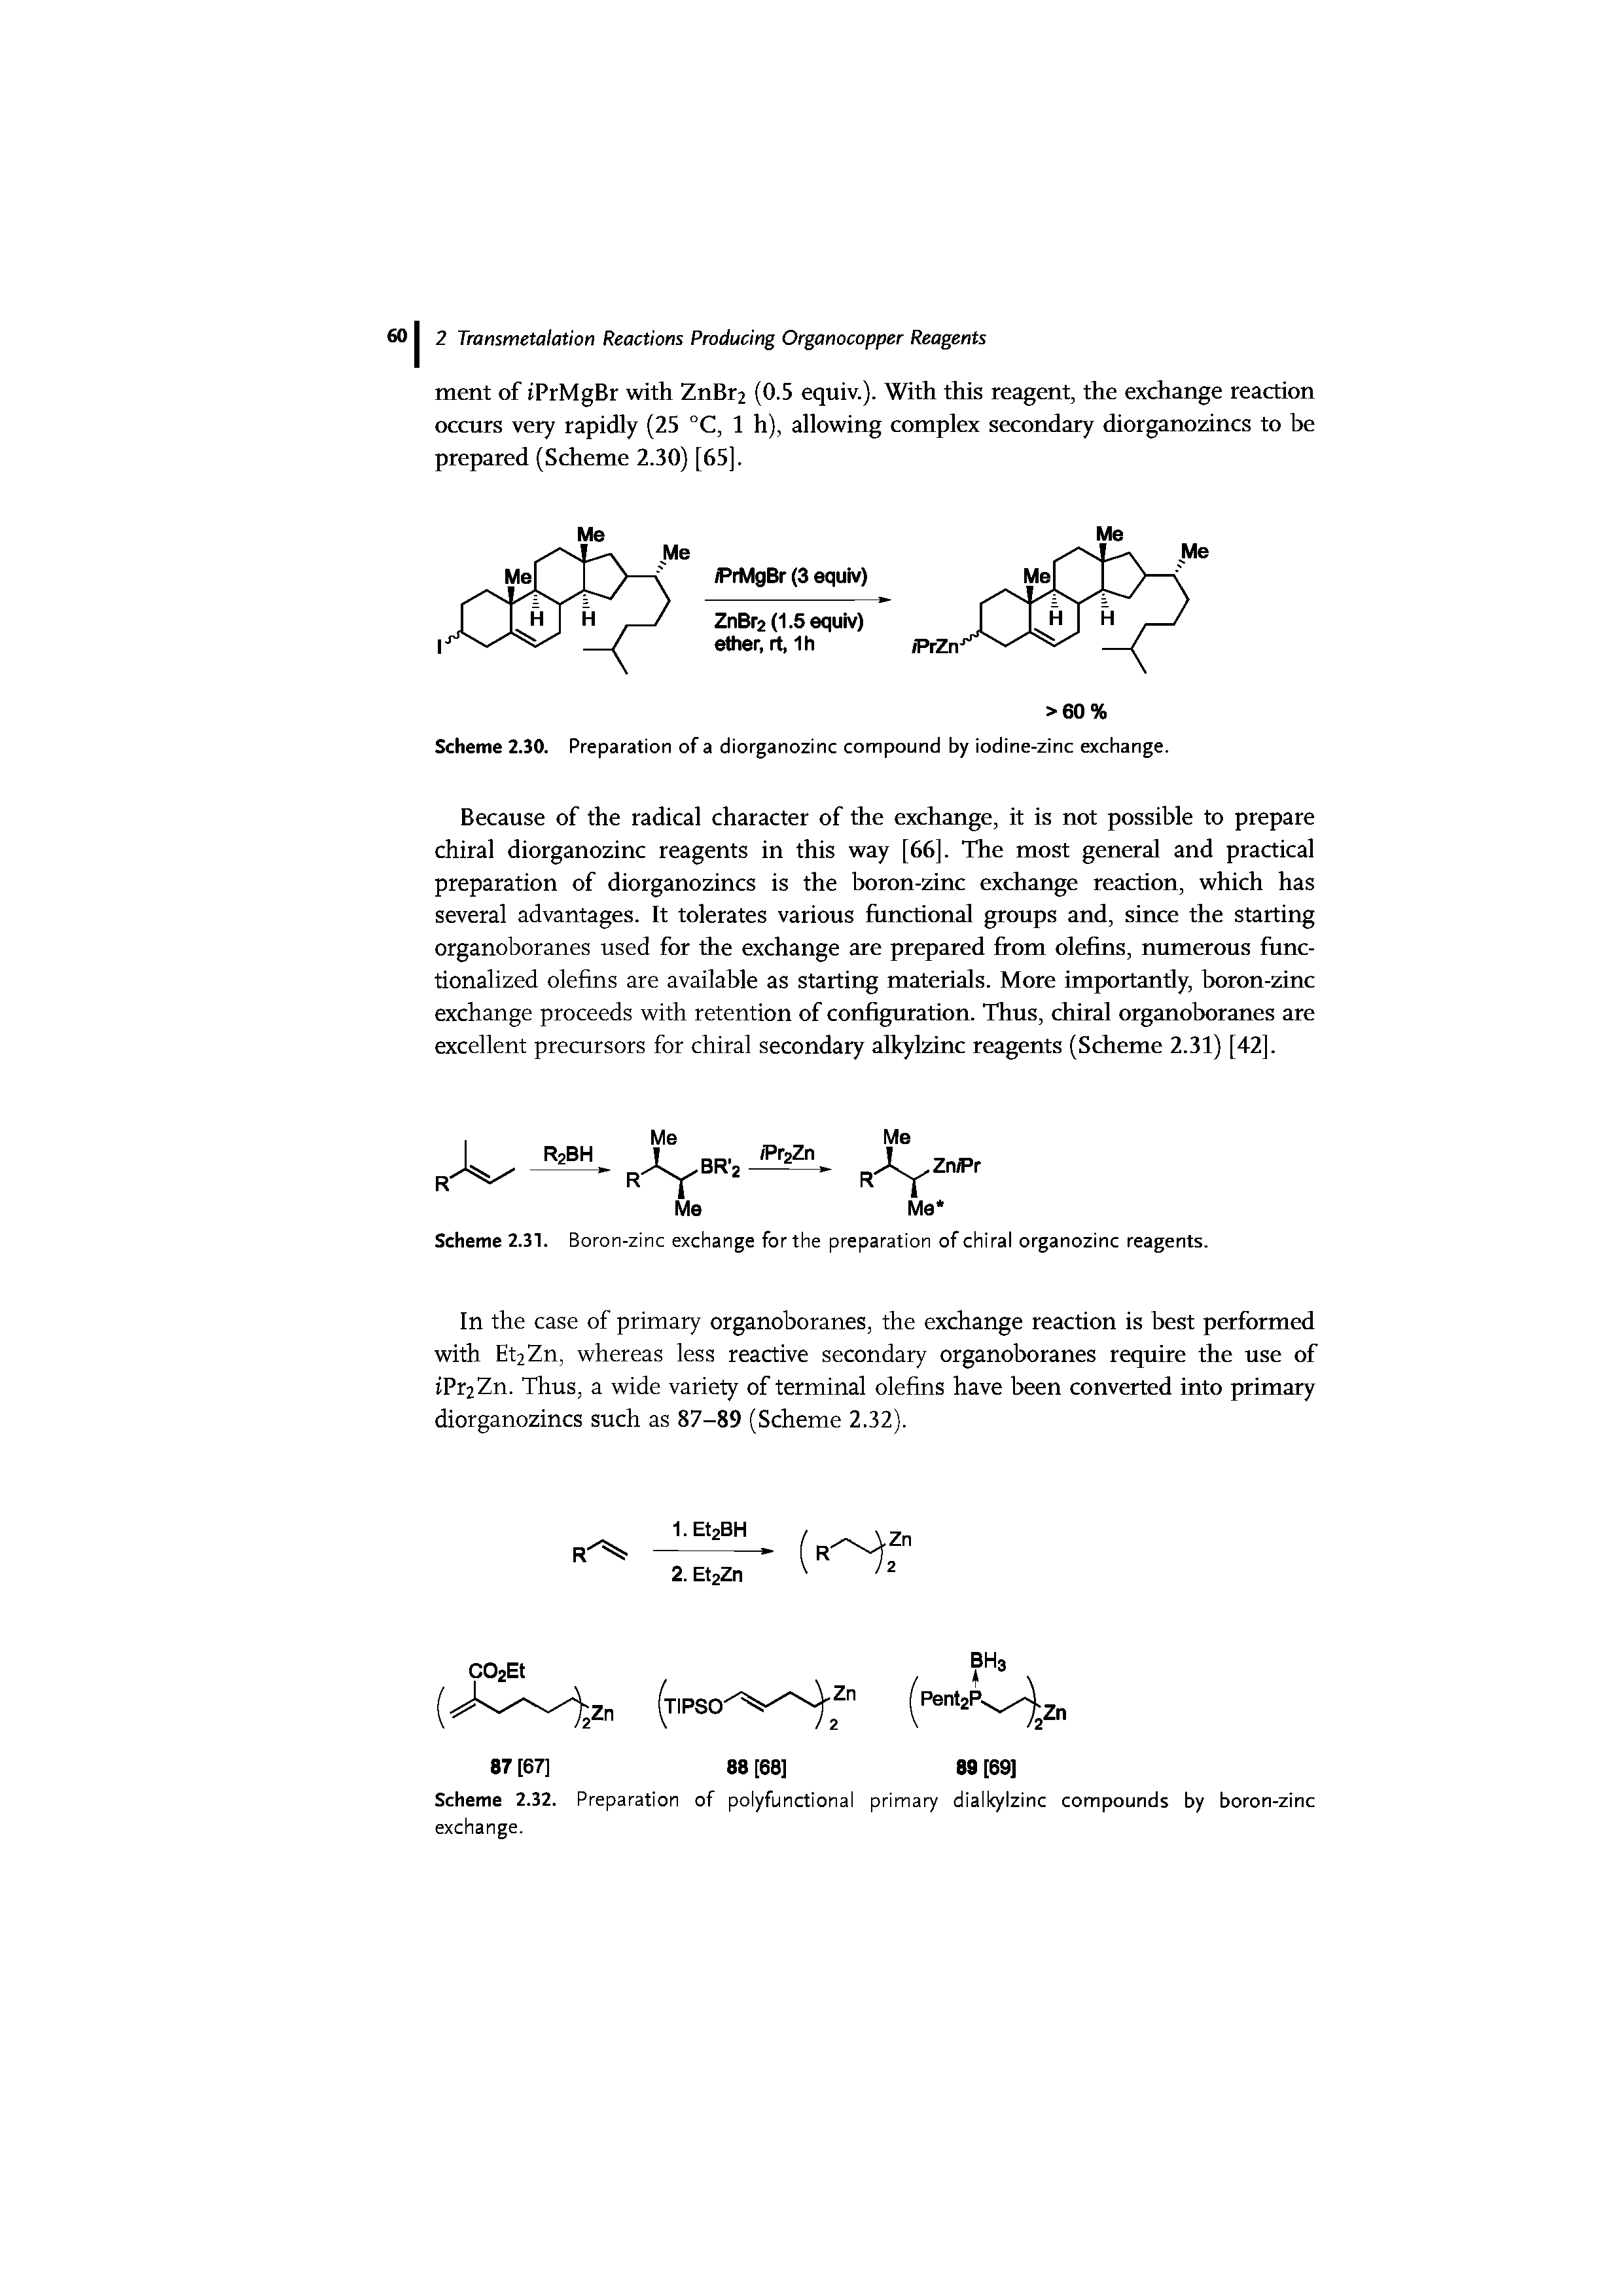 Scheme 2.32. Preparation of polyfunctional primary dialkylzinc compounds by boron-zinc exchange.